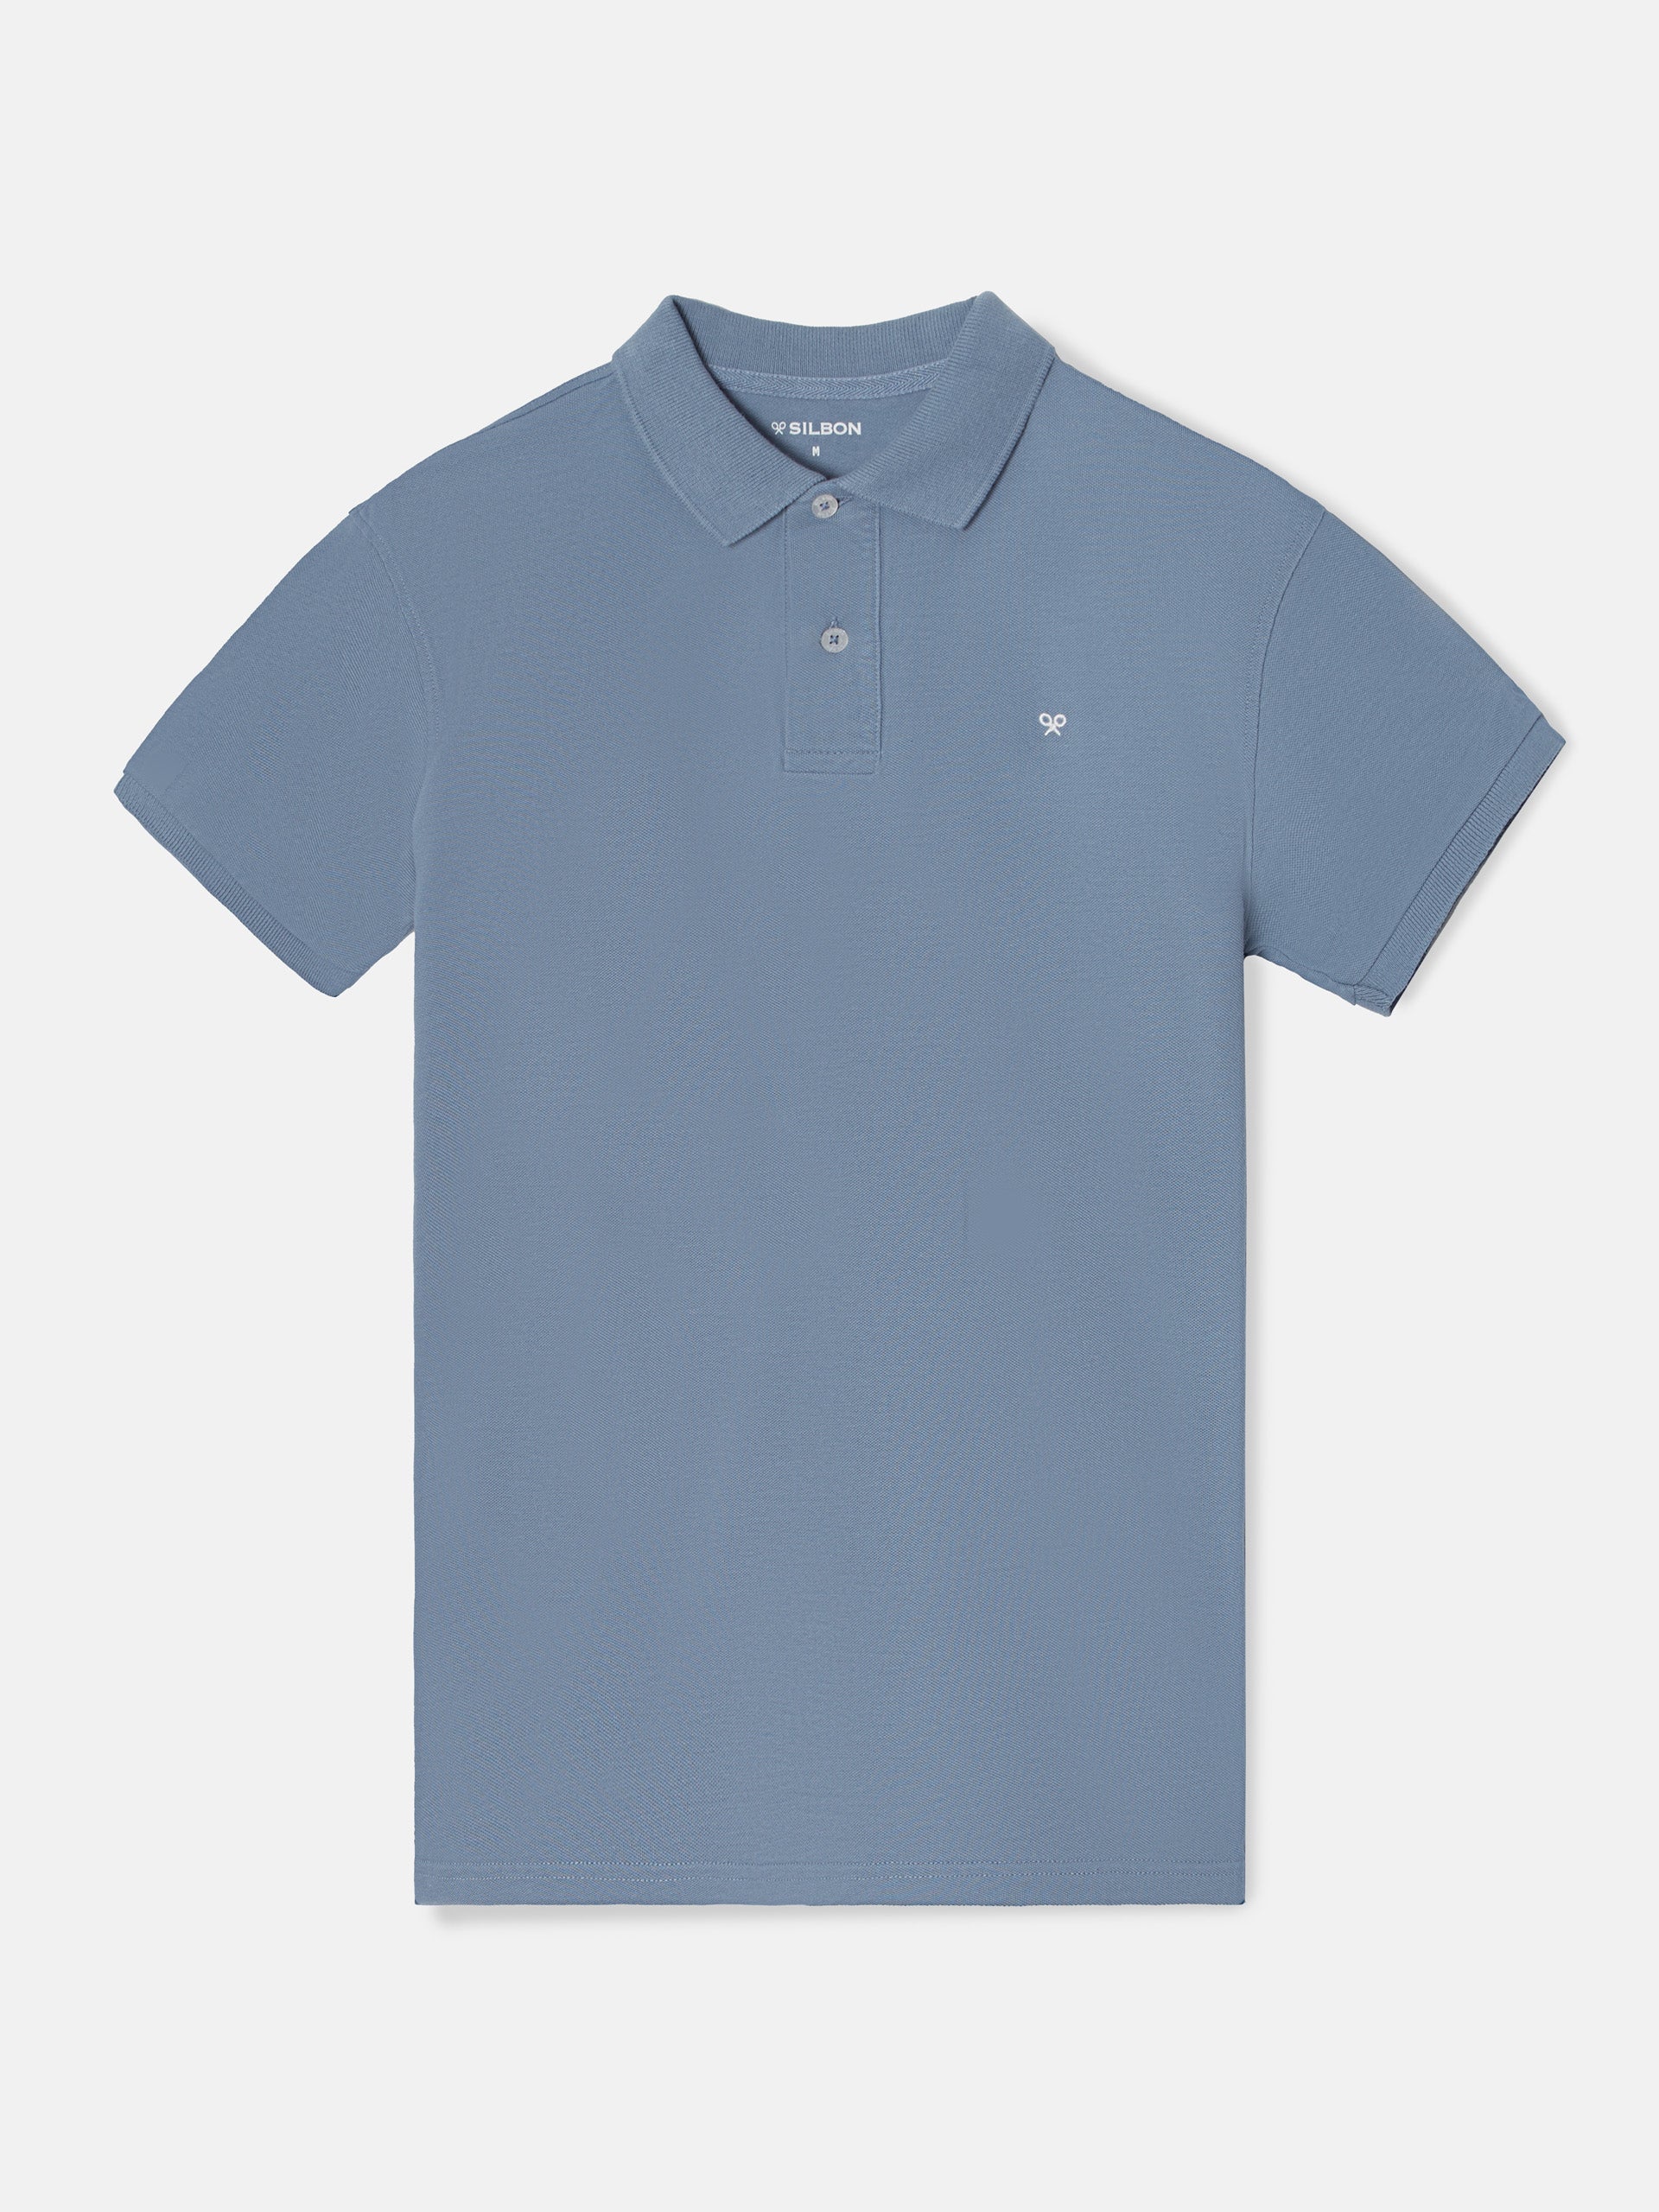 Classic plain medium blue polo shirt